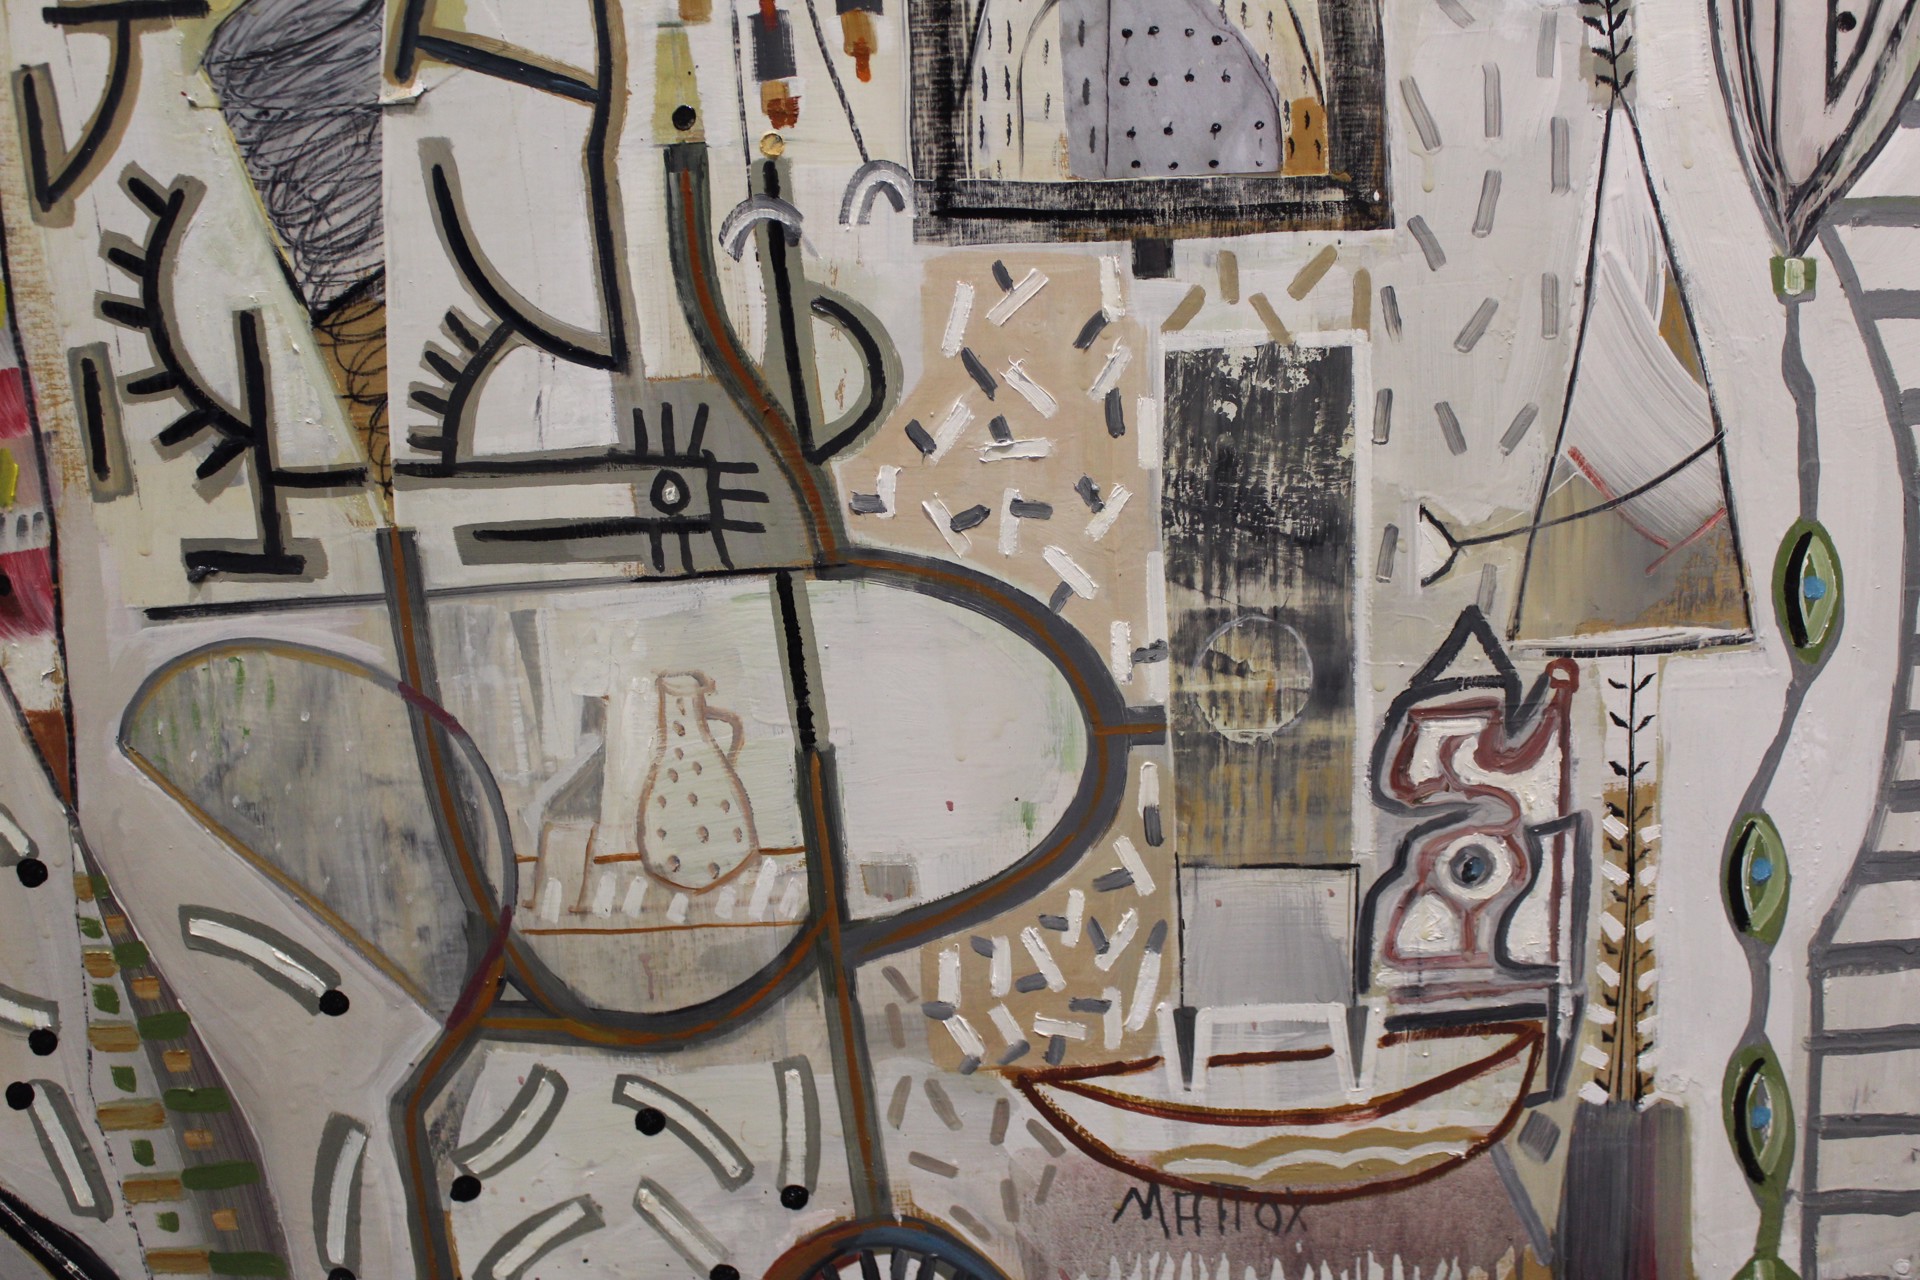 Epistle to Joan Miro by Bernard Mattox